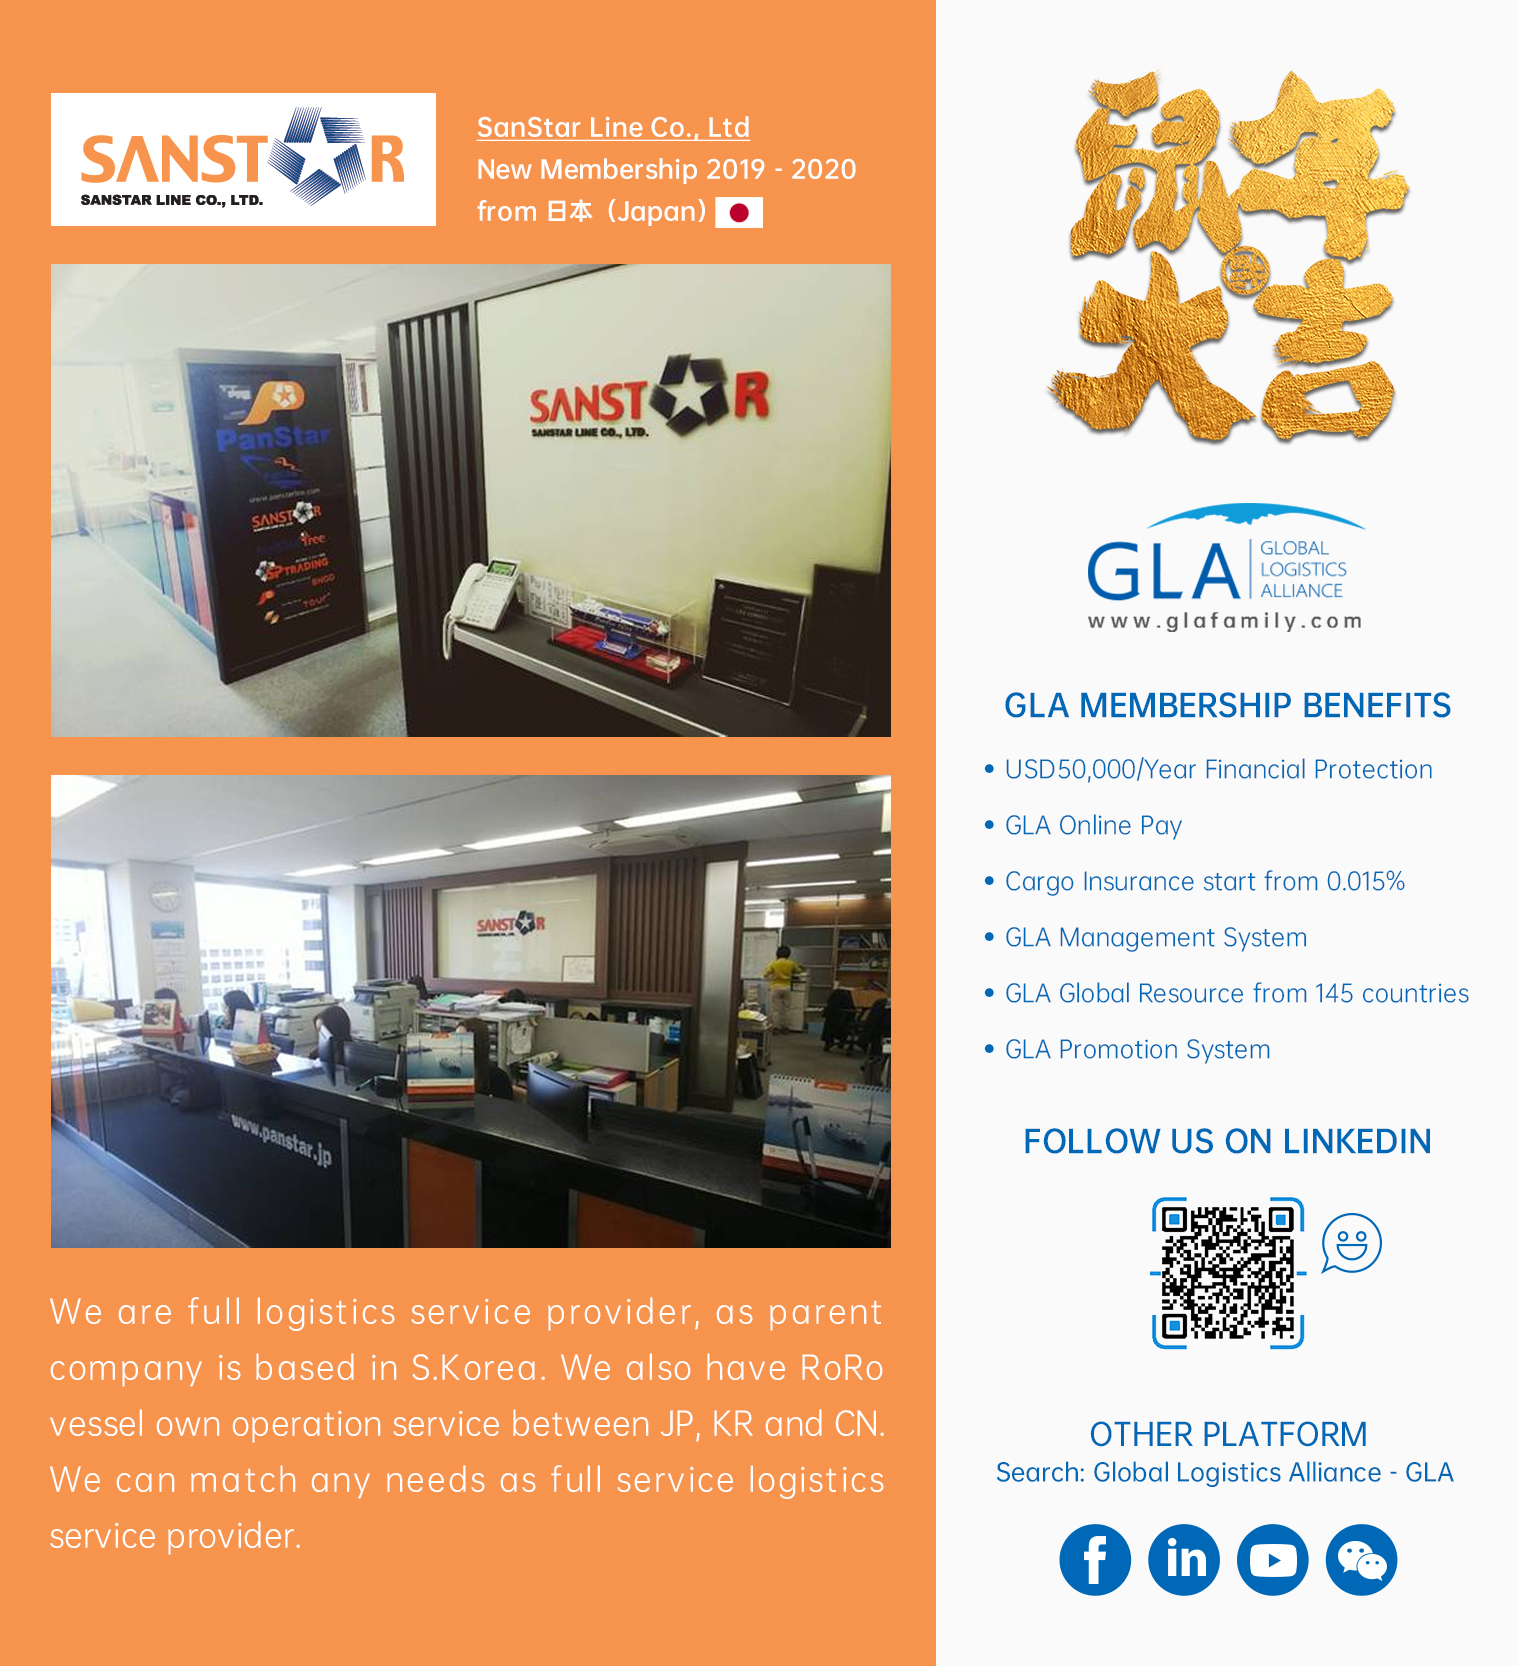 GLA NEW MEMBERSHIP | SanStar Line Co., Ltd. representing Japan